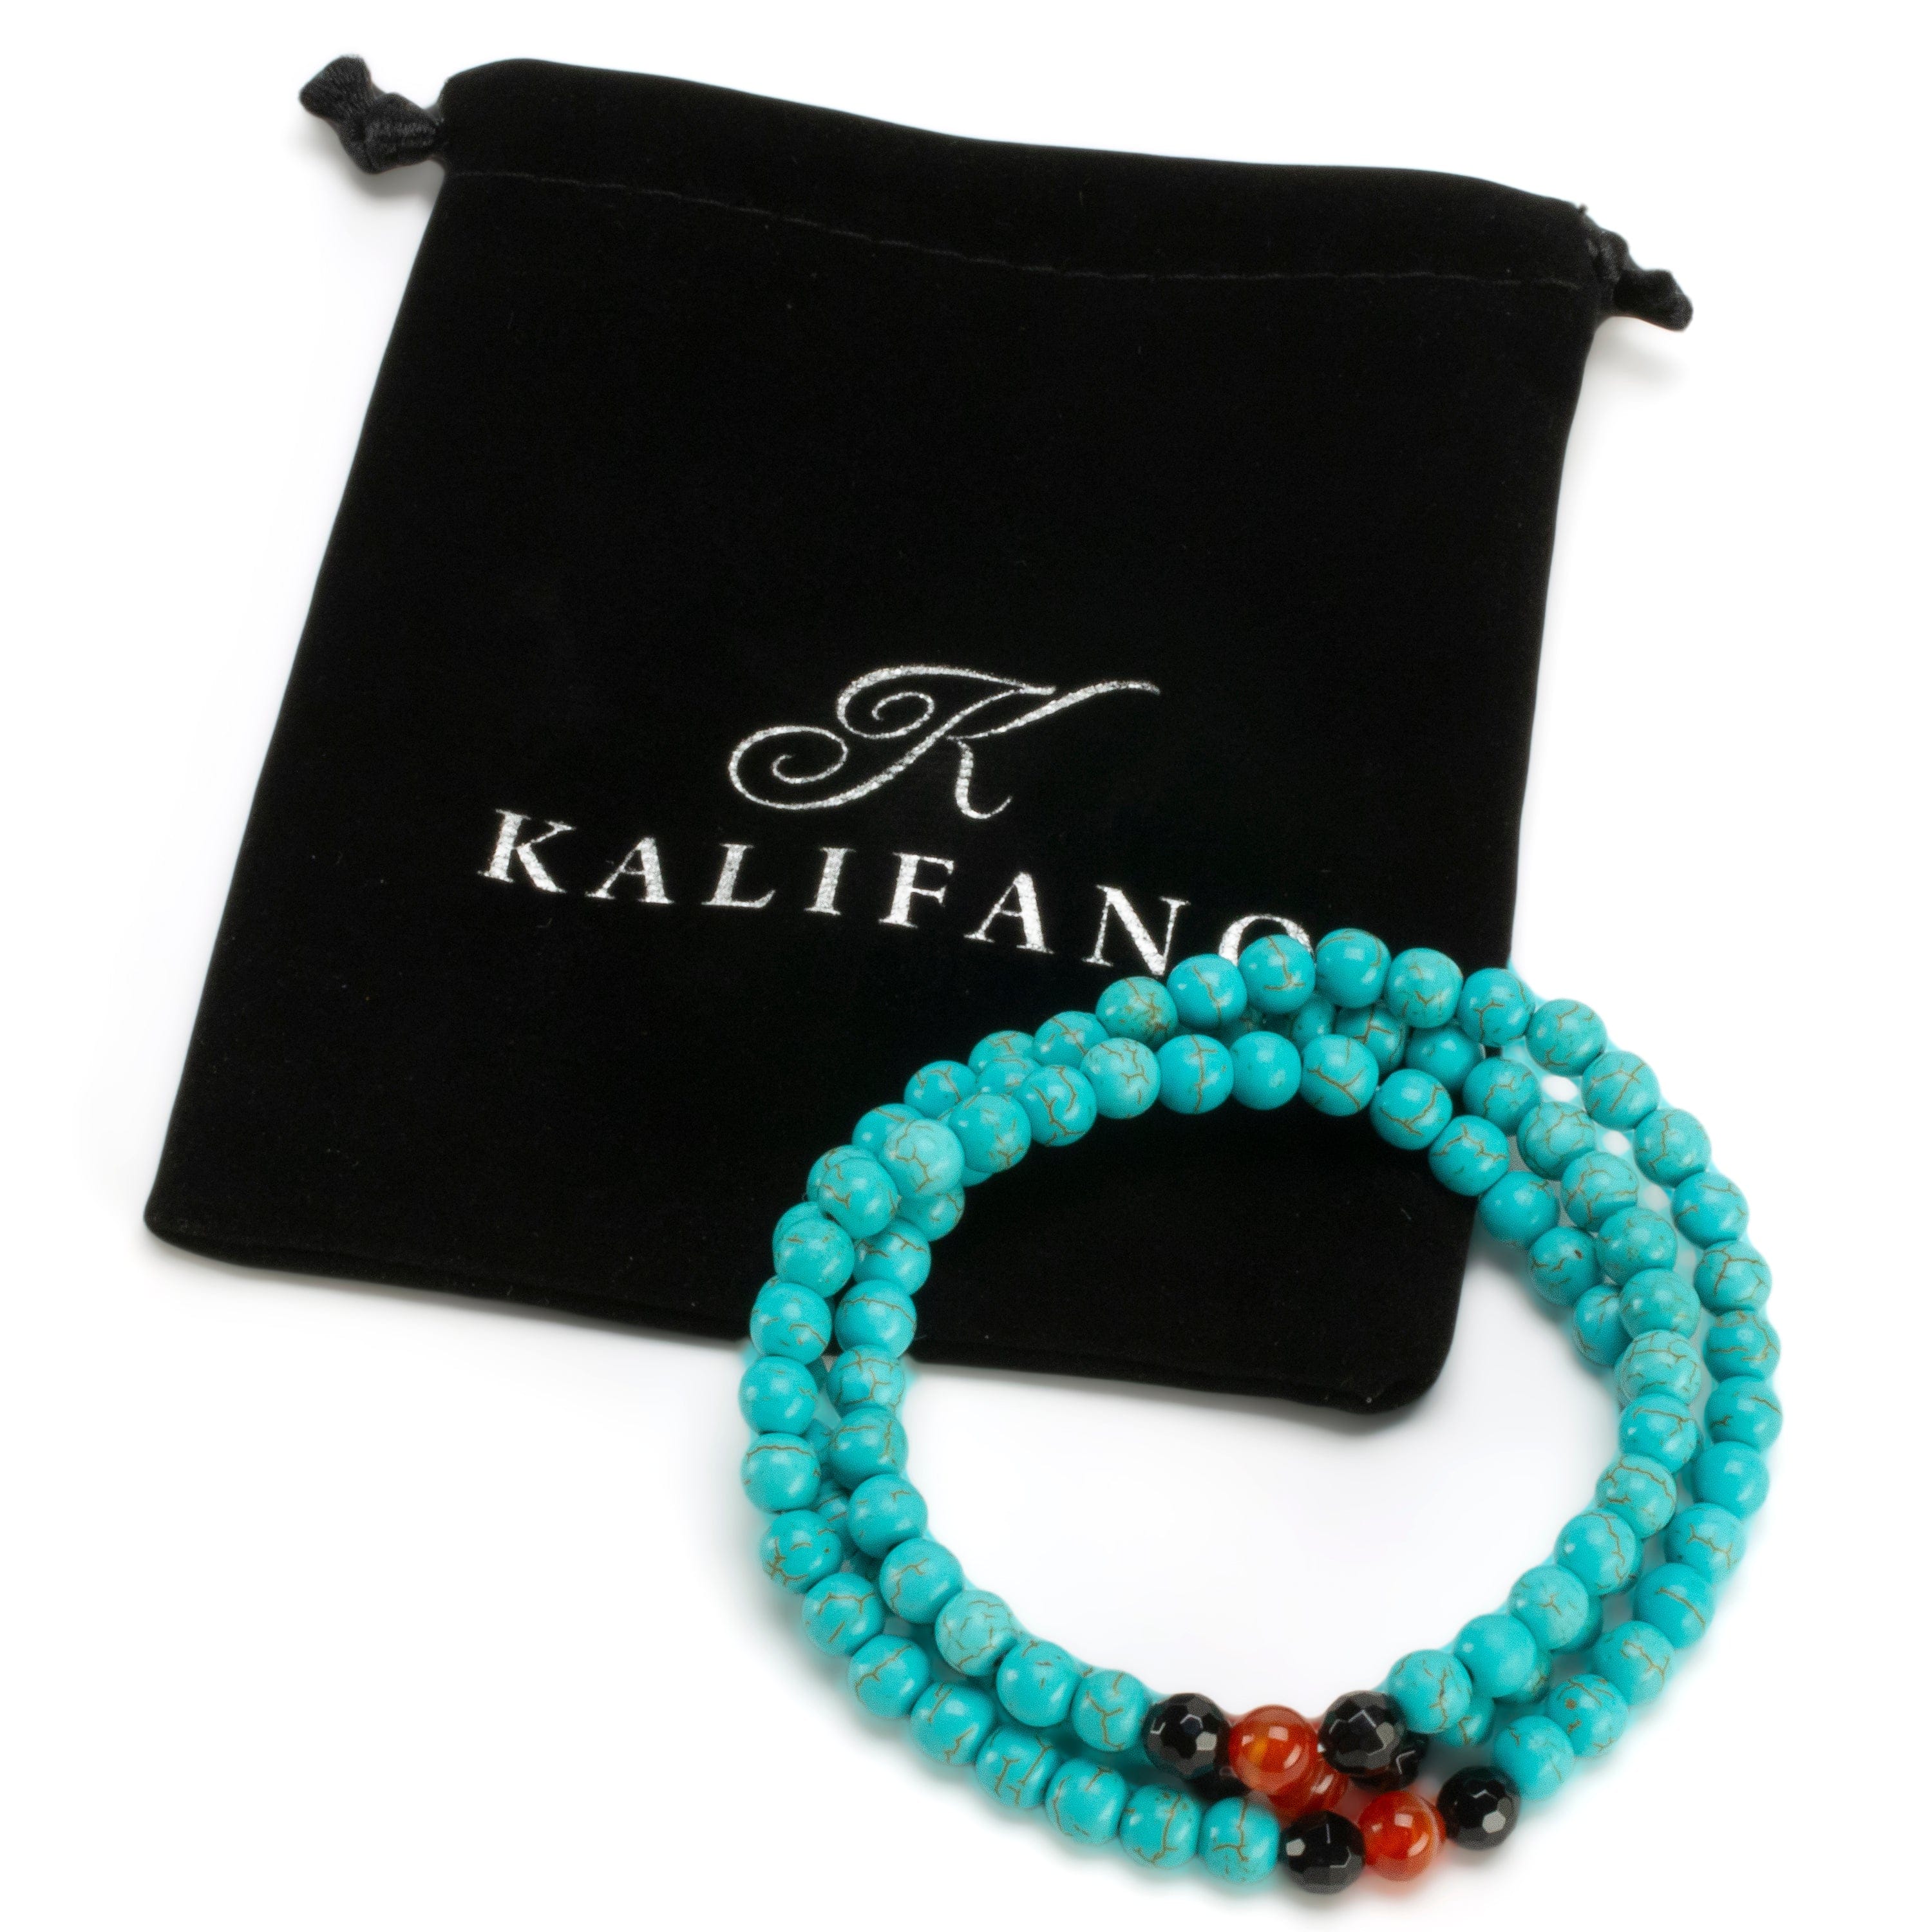 Kalifano Gemstone Bracelets Howlite Turquoise 6mm Beads with Black Agate & Carnelian Accent Beads Triple Wrap Gemstone Elastic Bracelet WHITE-BGI3-083